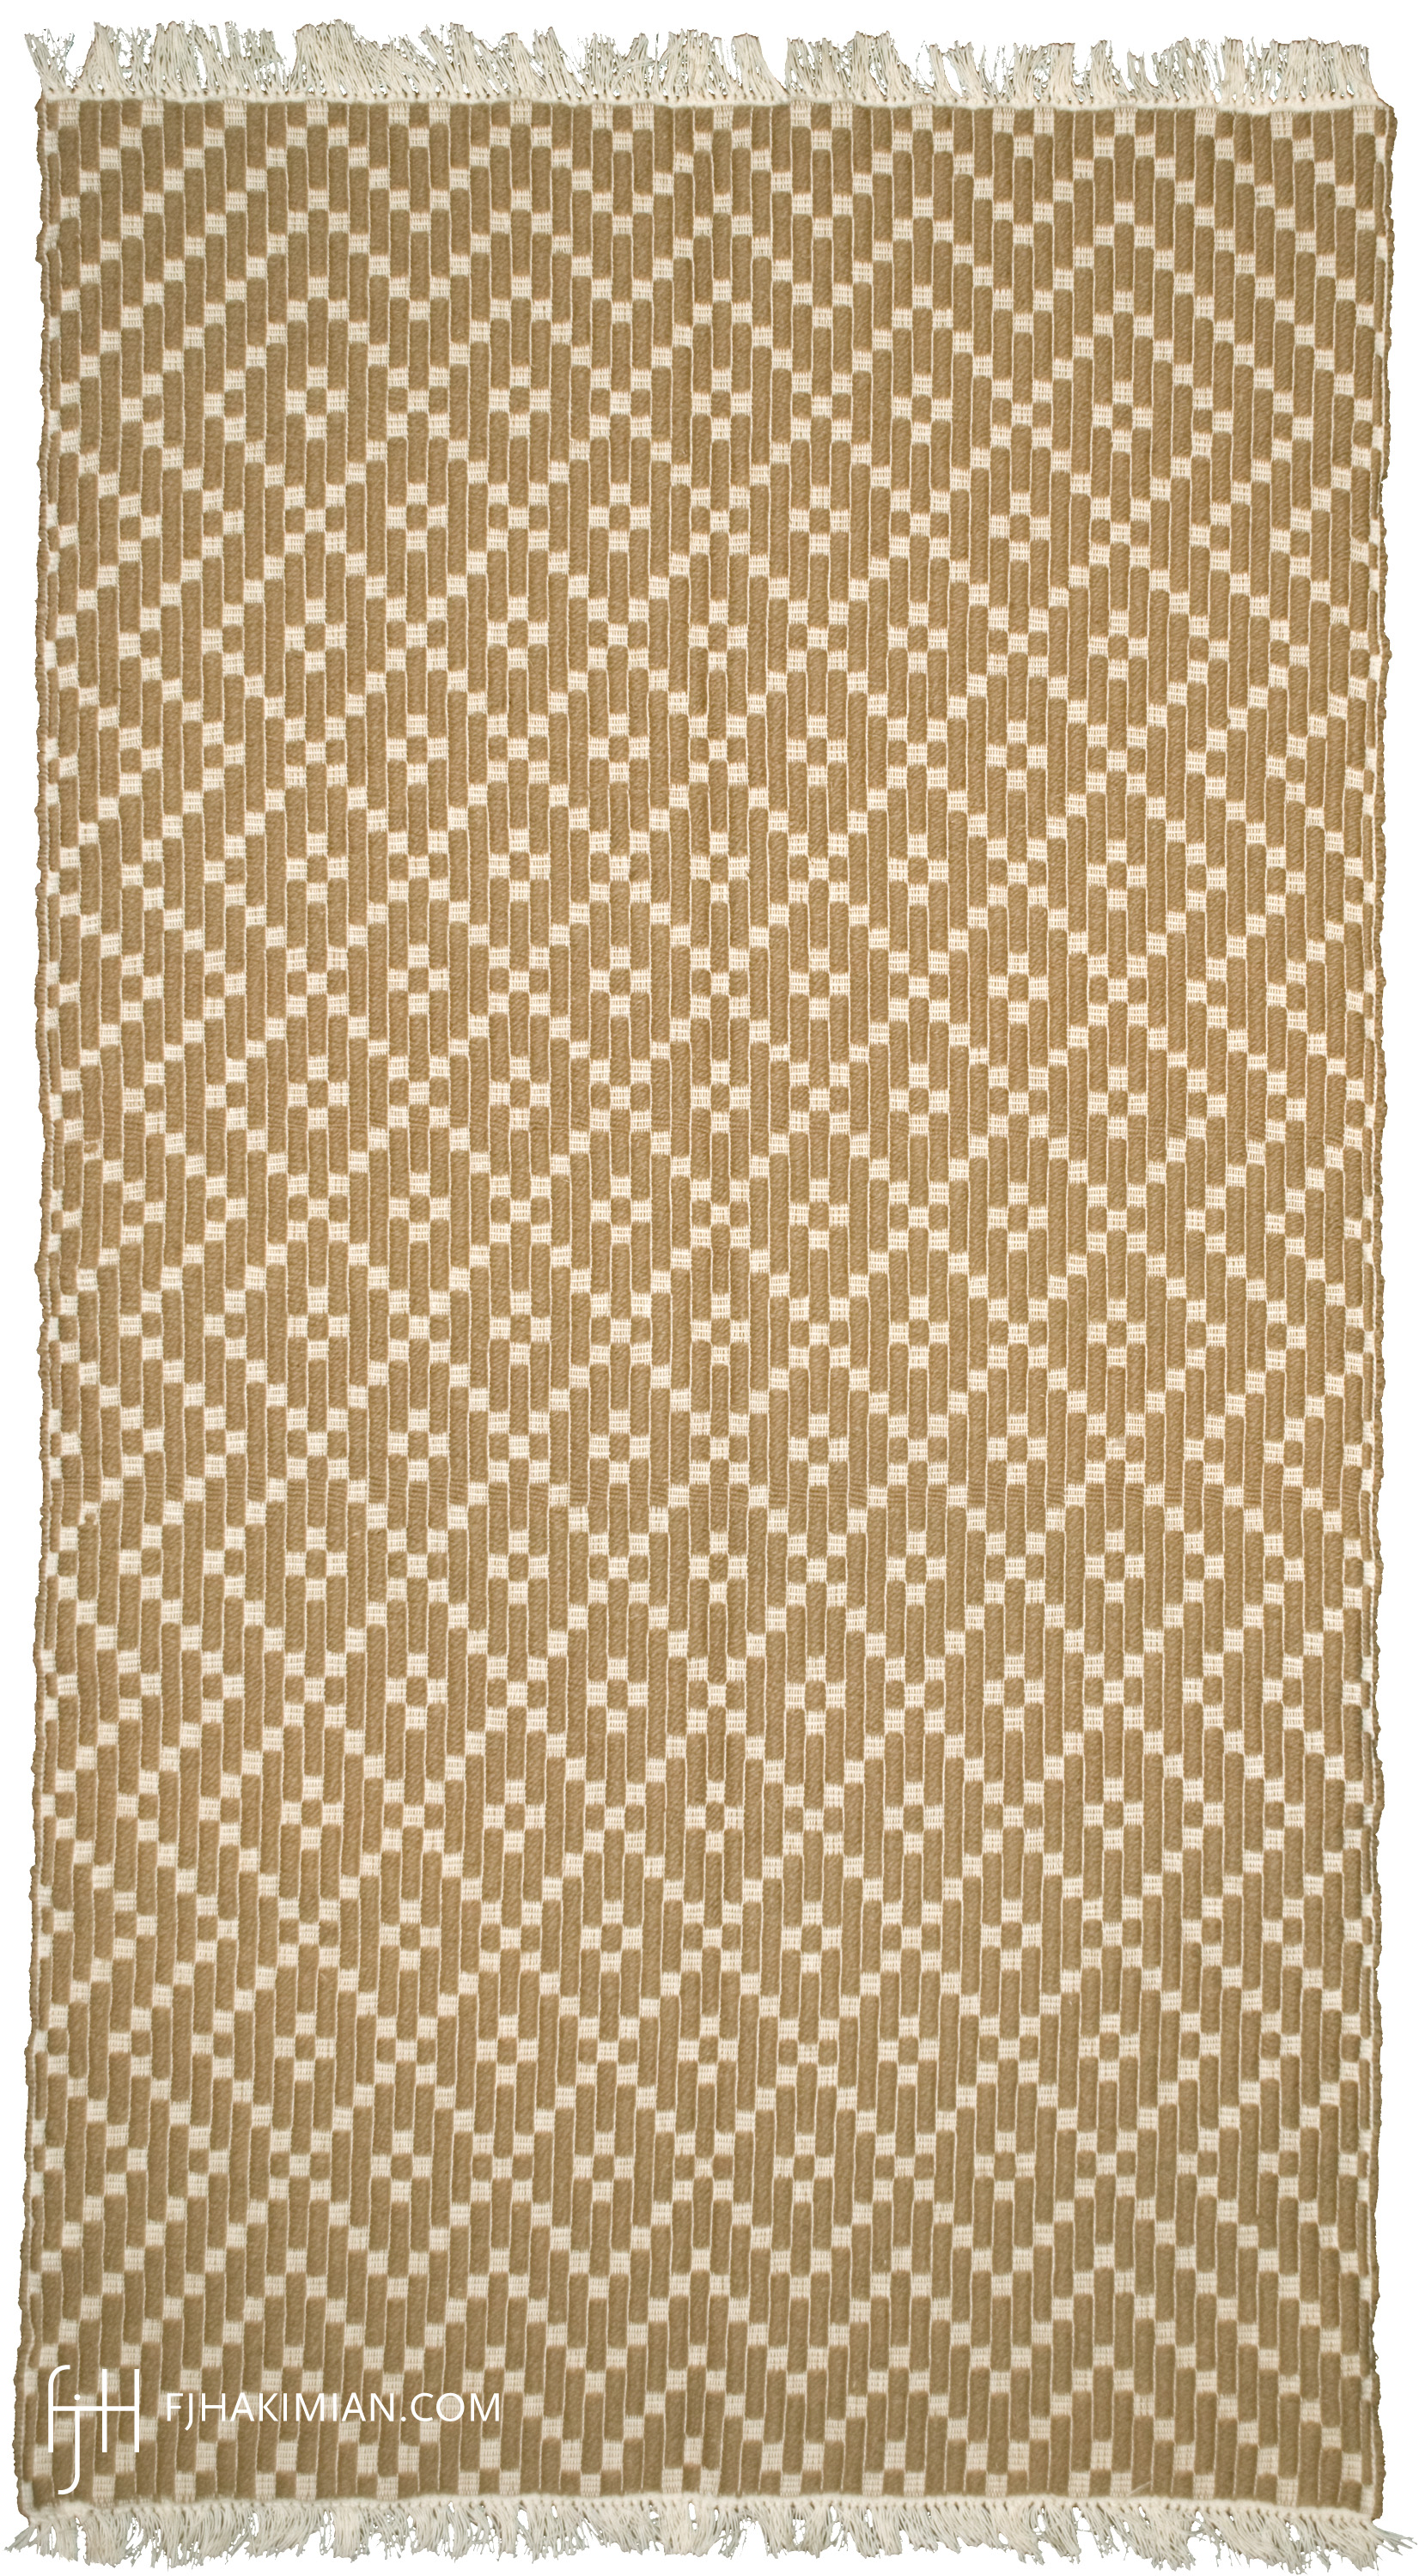 25088 | SIS-103 Design | Custom Sardinian Carpet | FJ Hakimian | Carpet Gallery in NYC